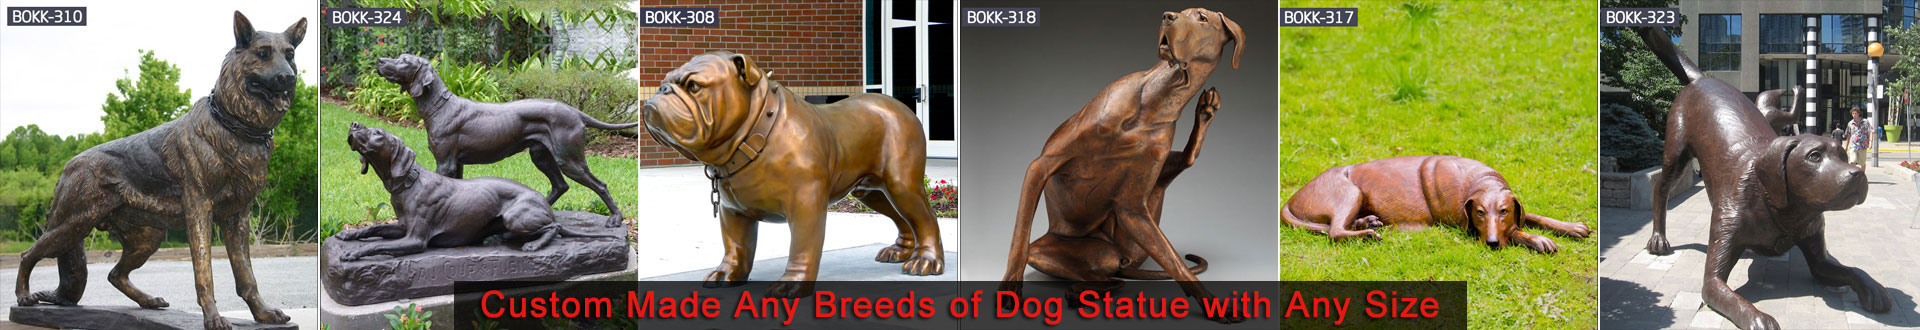 Dachshund Memorial Statue Custom Dog Statues for Memorial UK